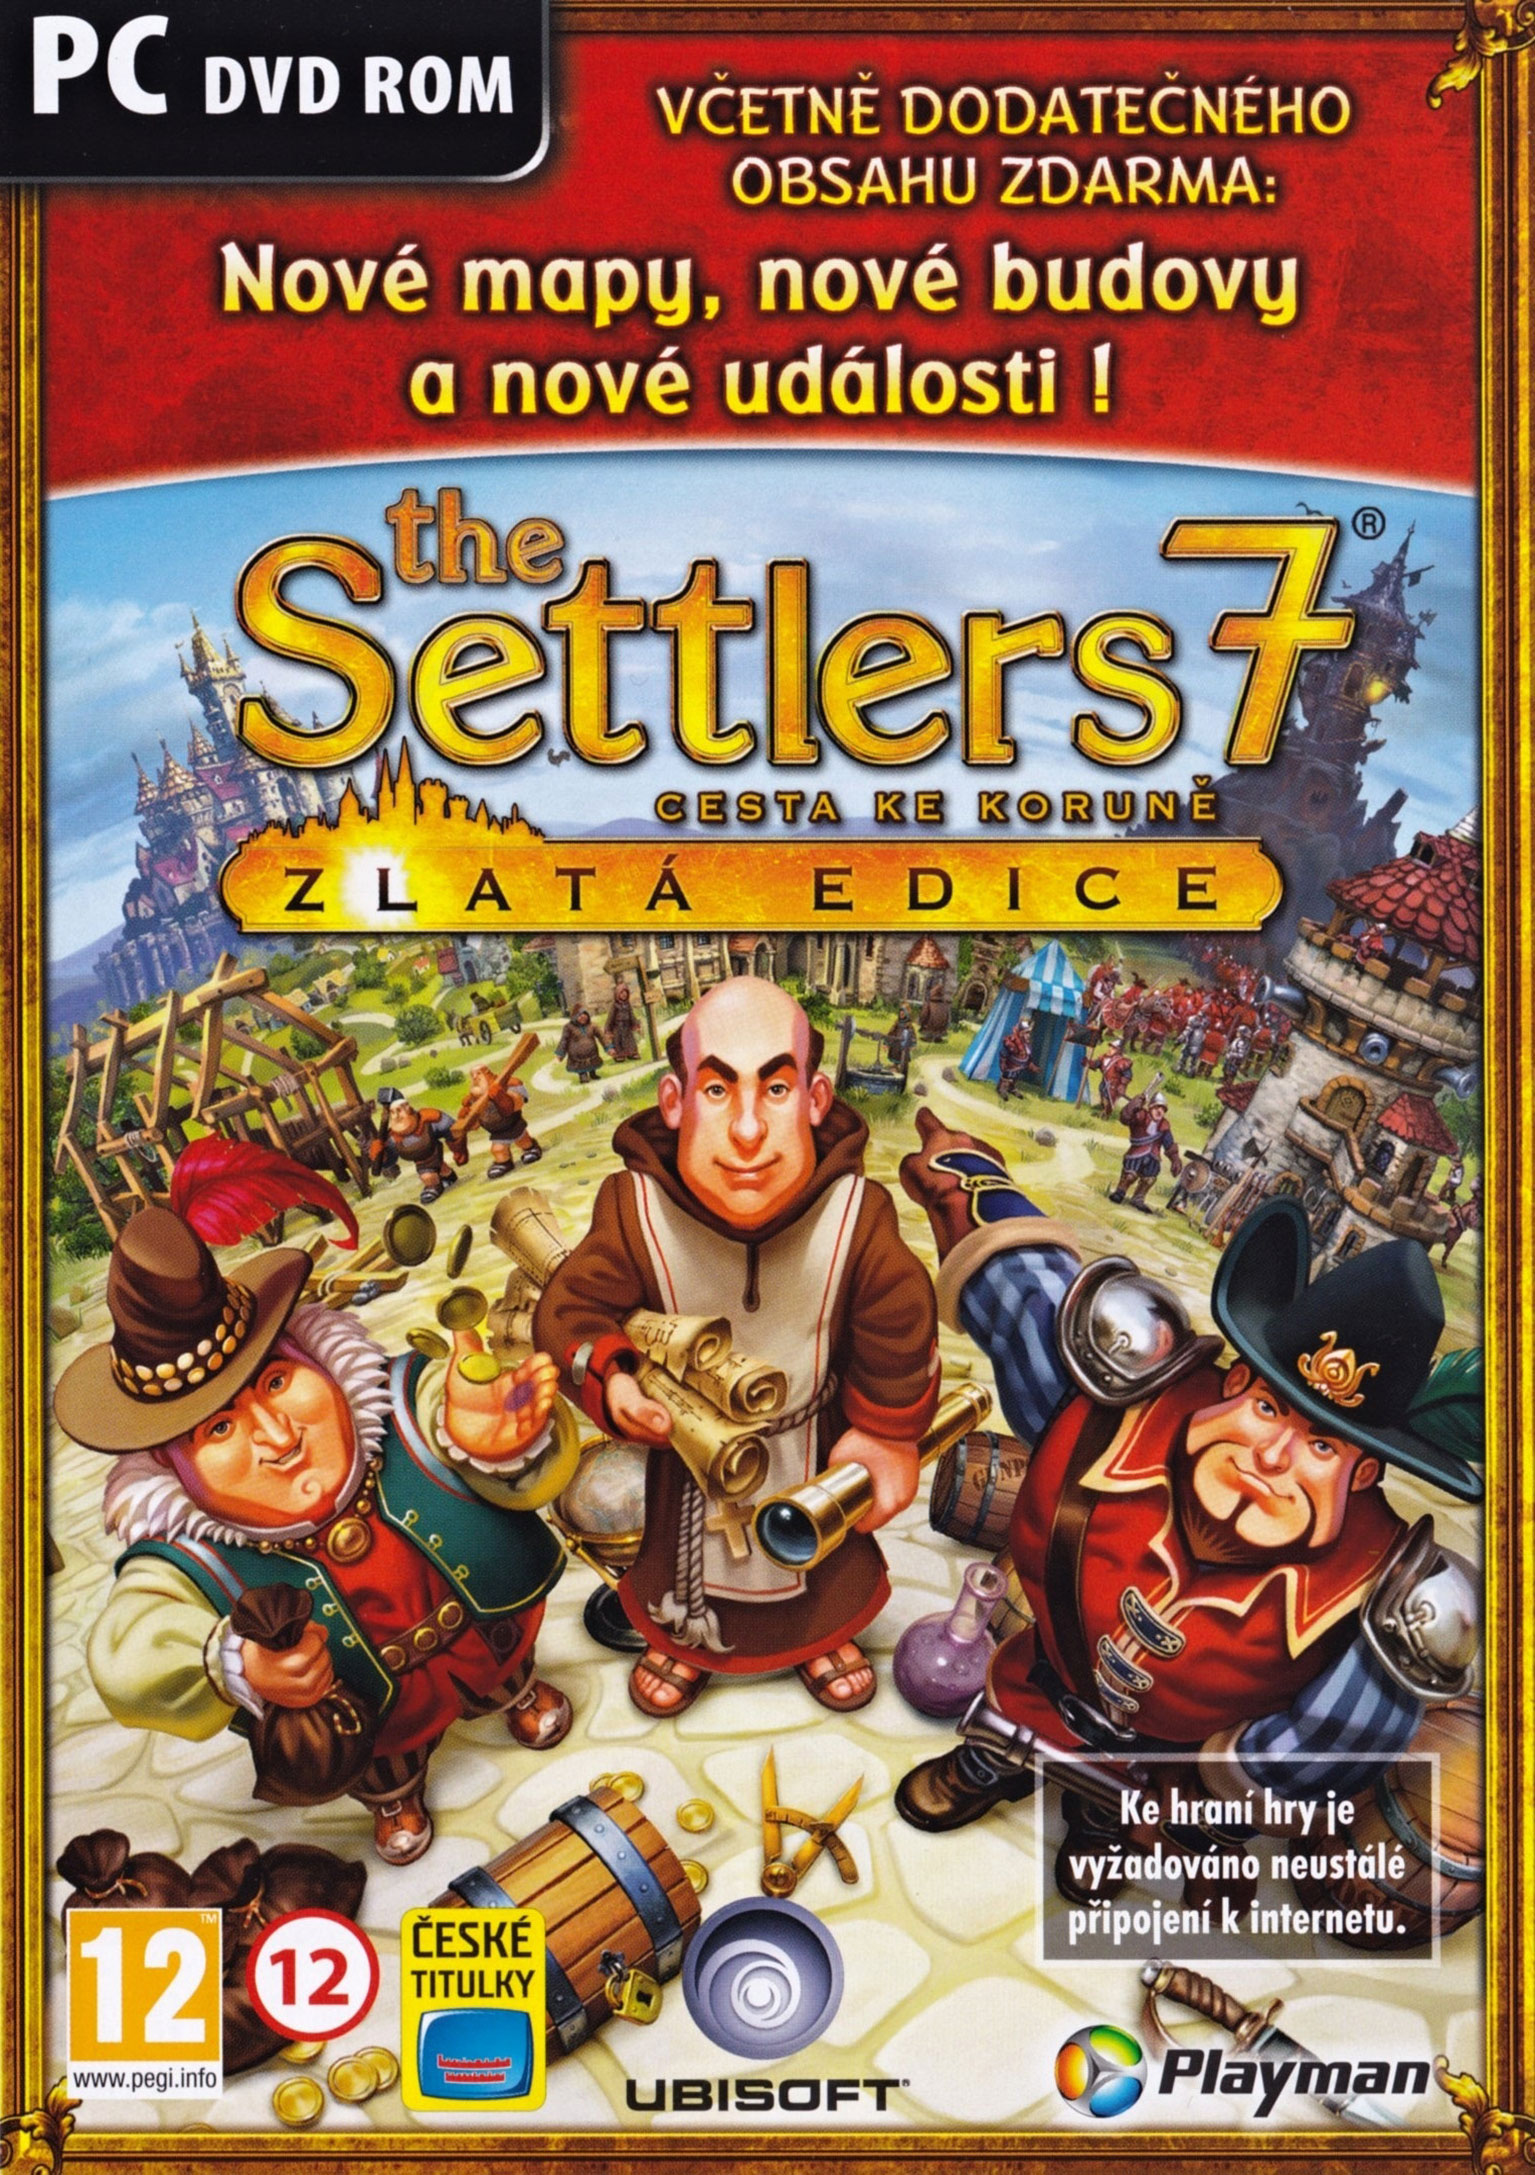 Settlers 3 Gold Edition Spolszczenie